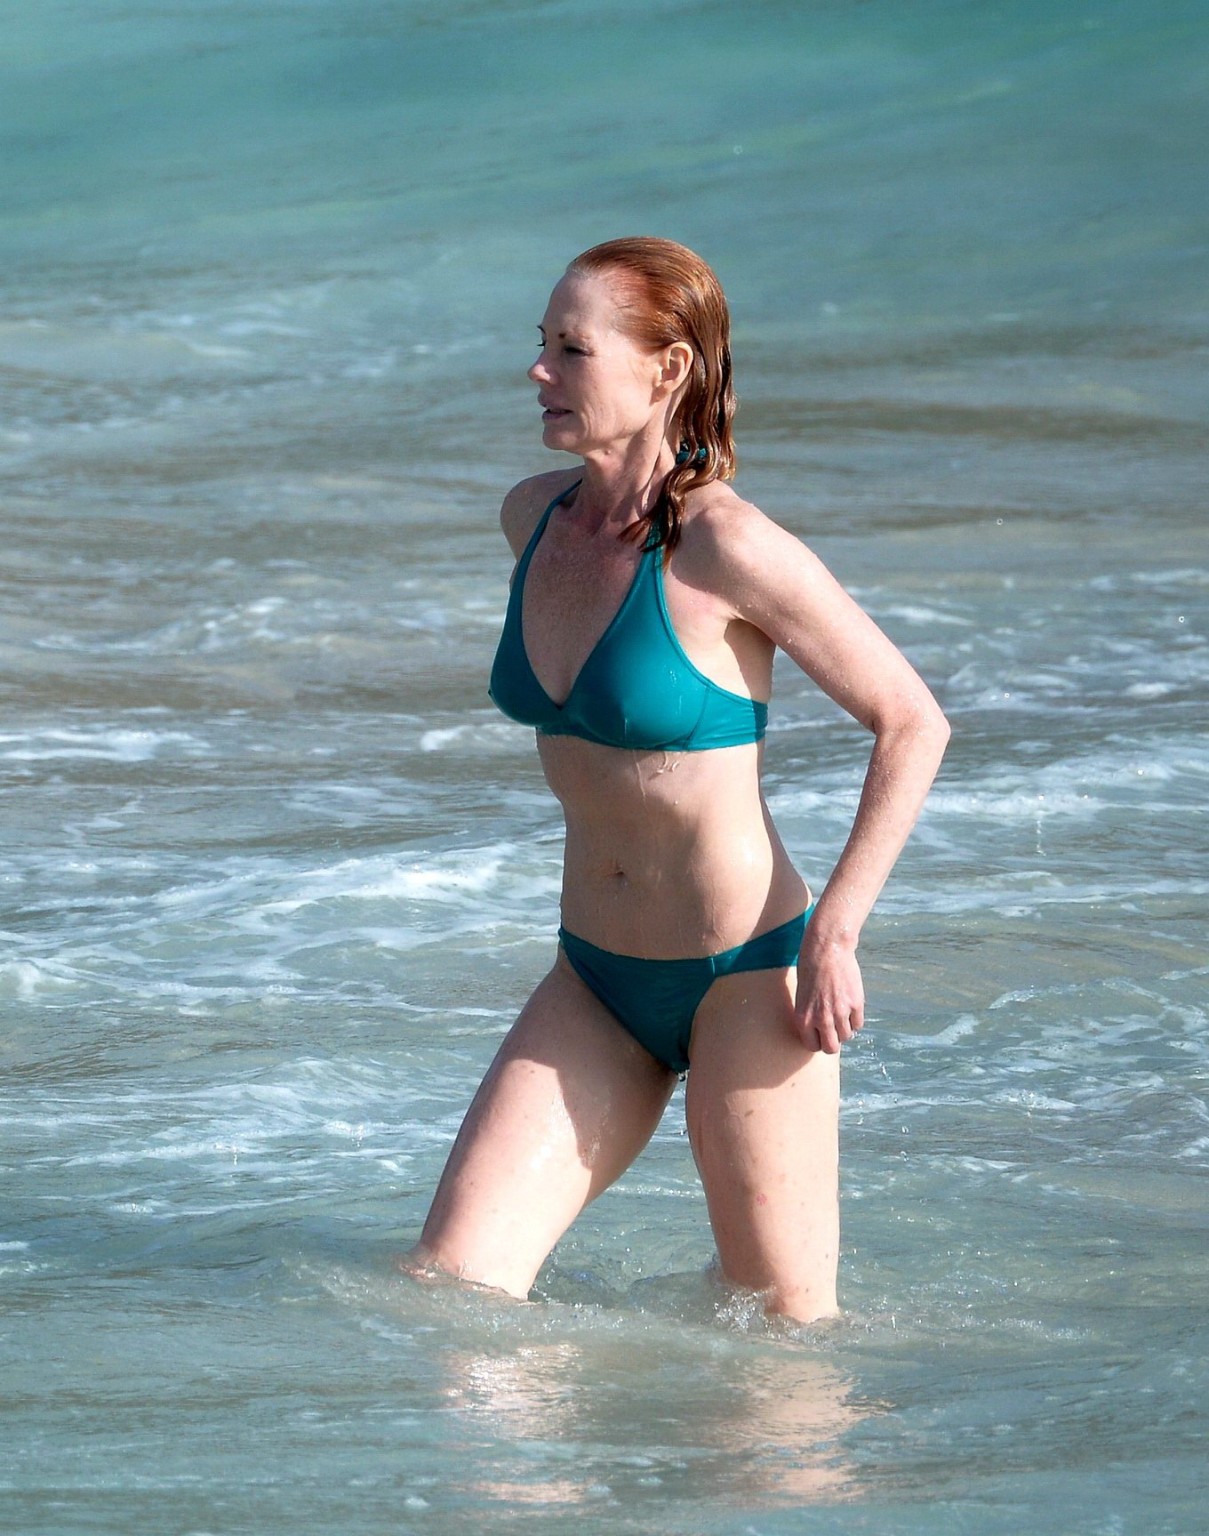 Marg helgenberger indossa un bikini turchese su una spiaggia a st.barts
 #75208446